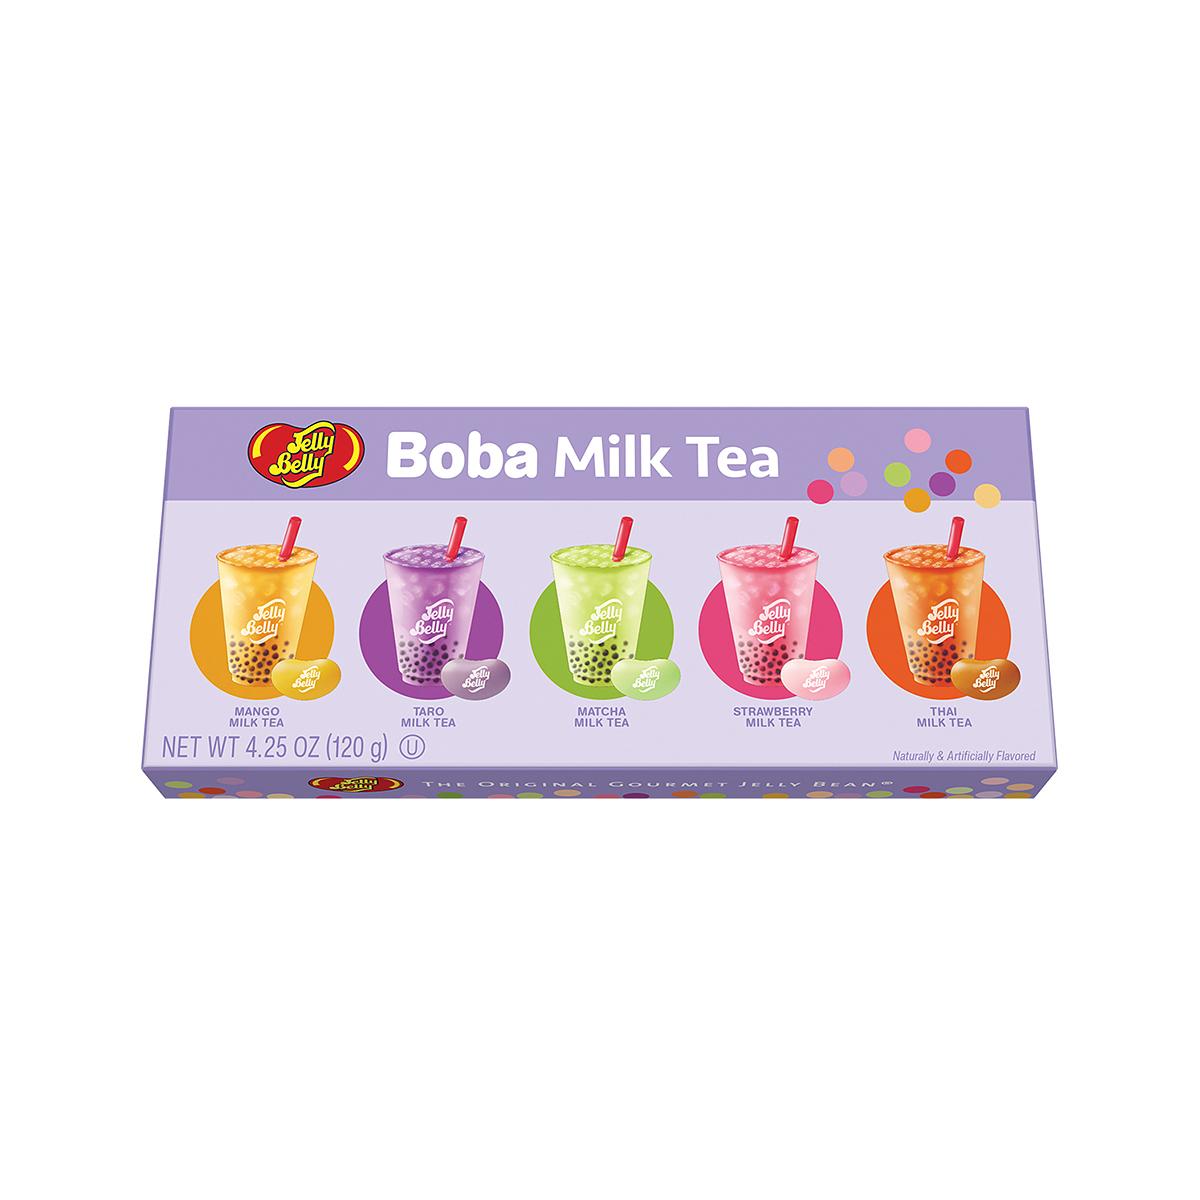 Best Boba Tea in Knoxville, TN - Order Boba Tea